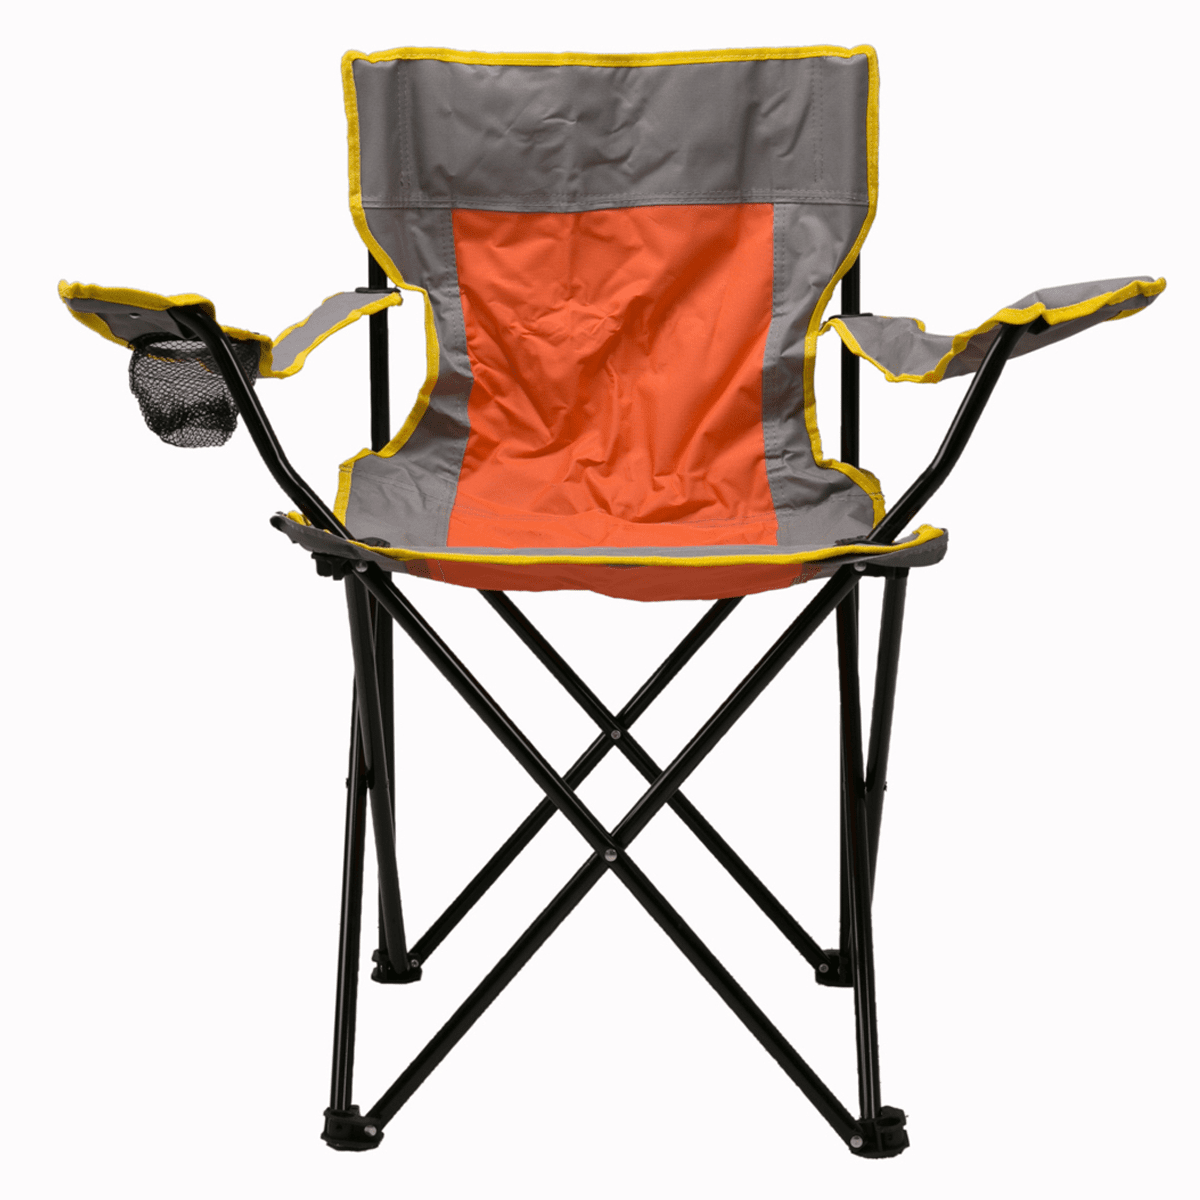 Oxford Camping Chair (52x49x81cm, Gray/Orange)